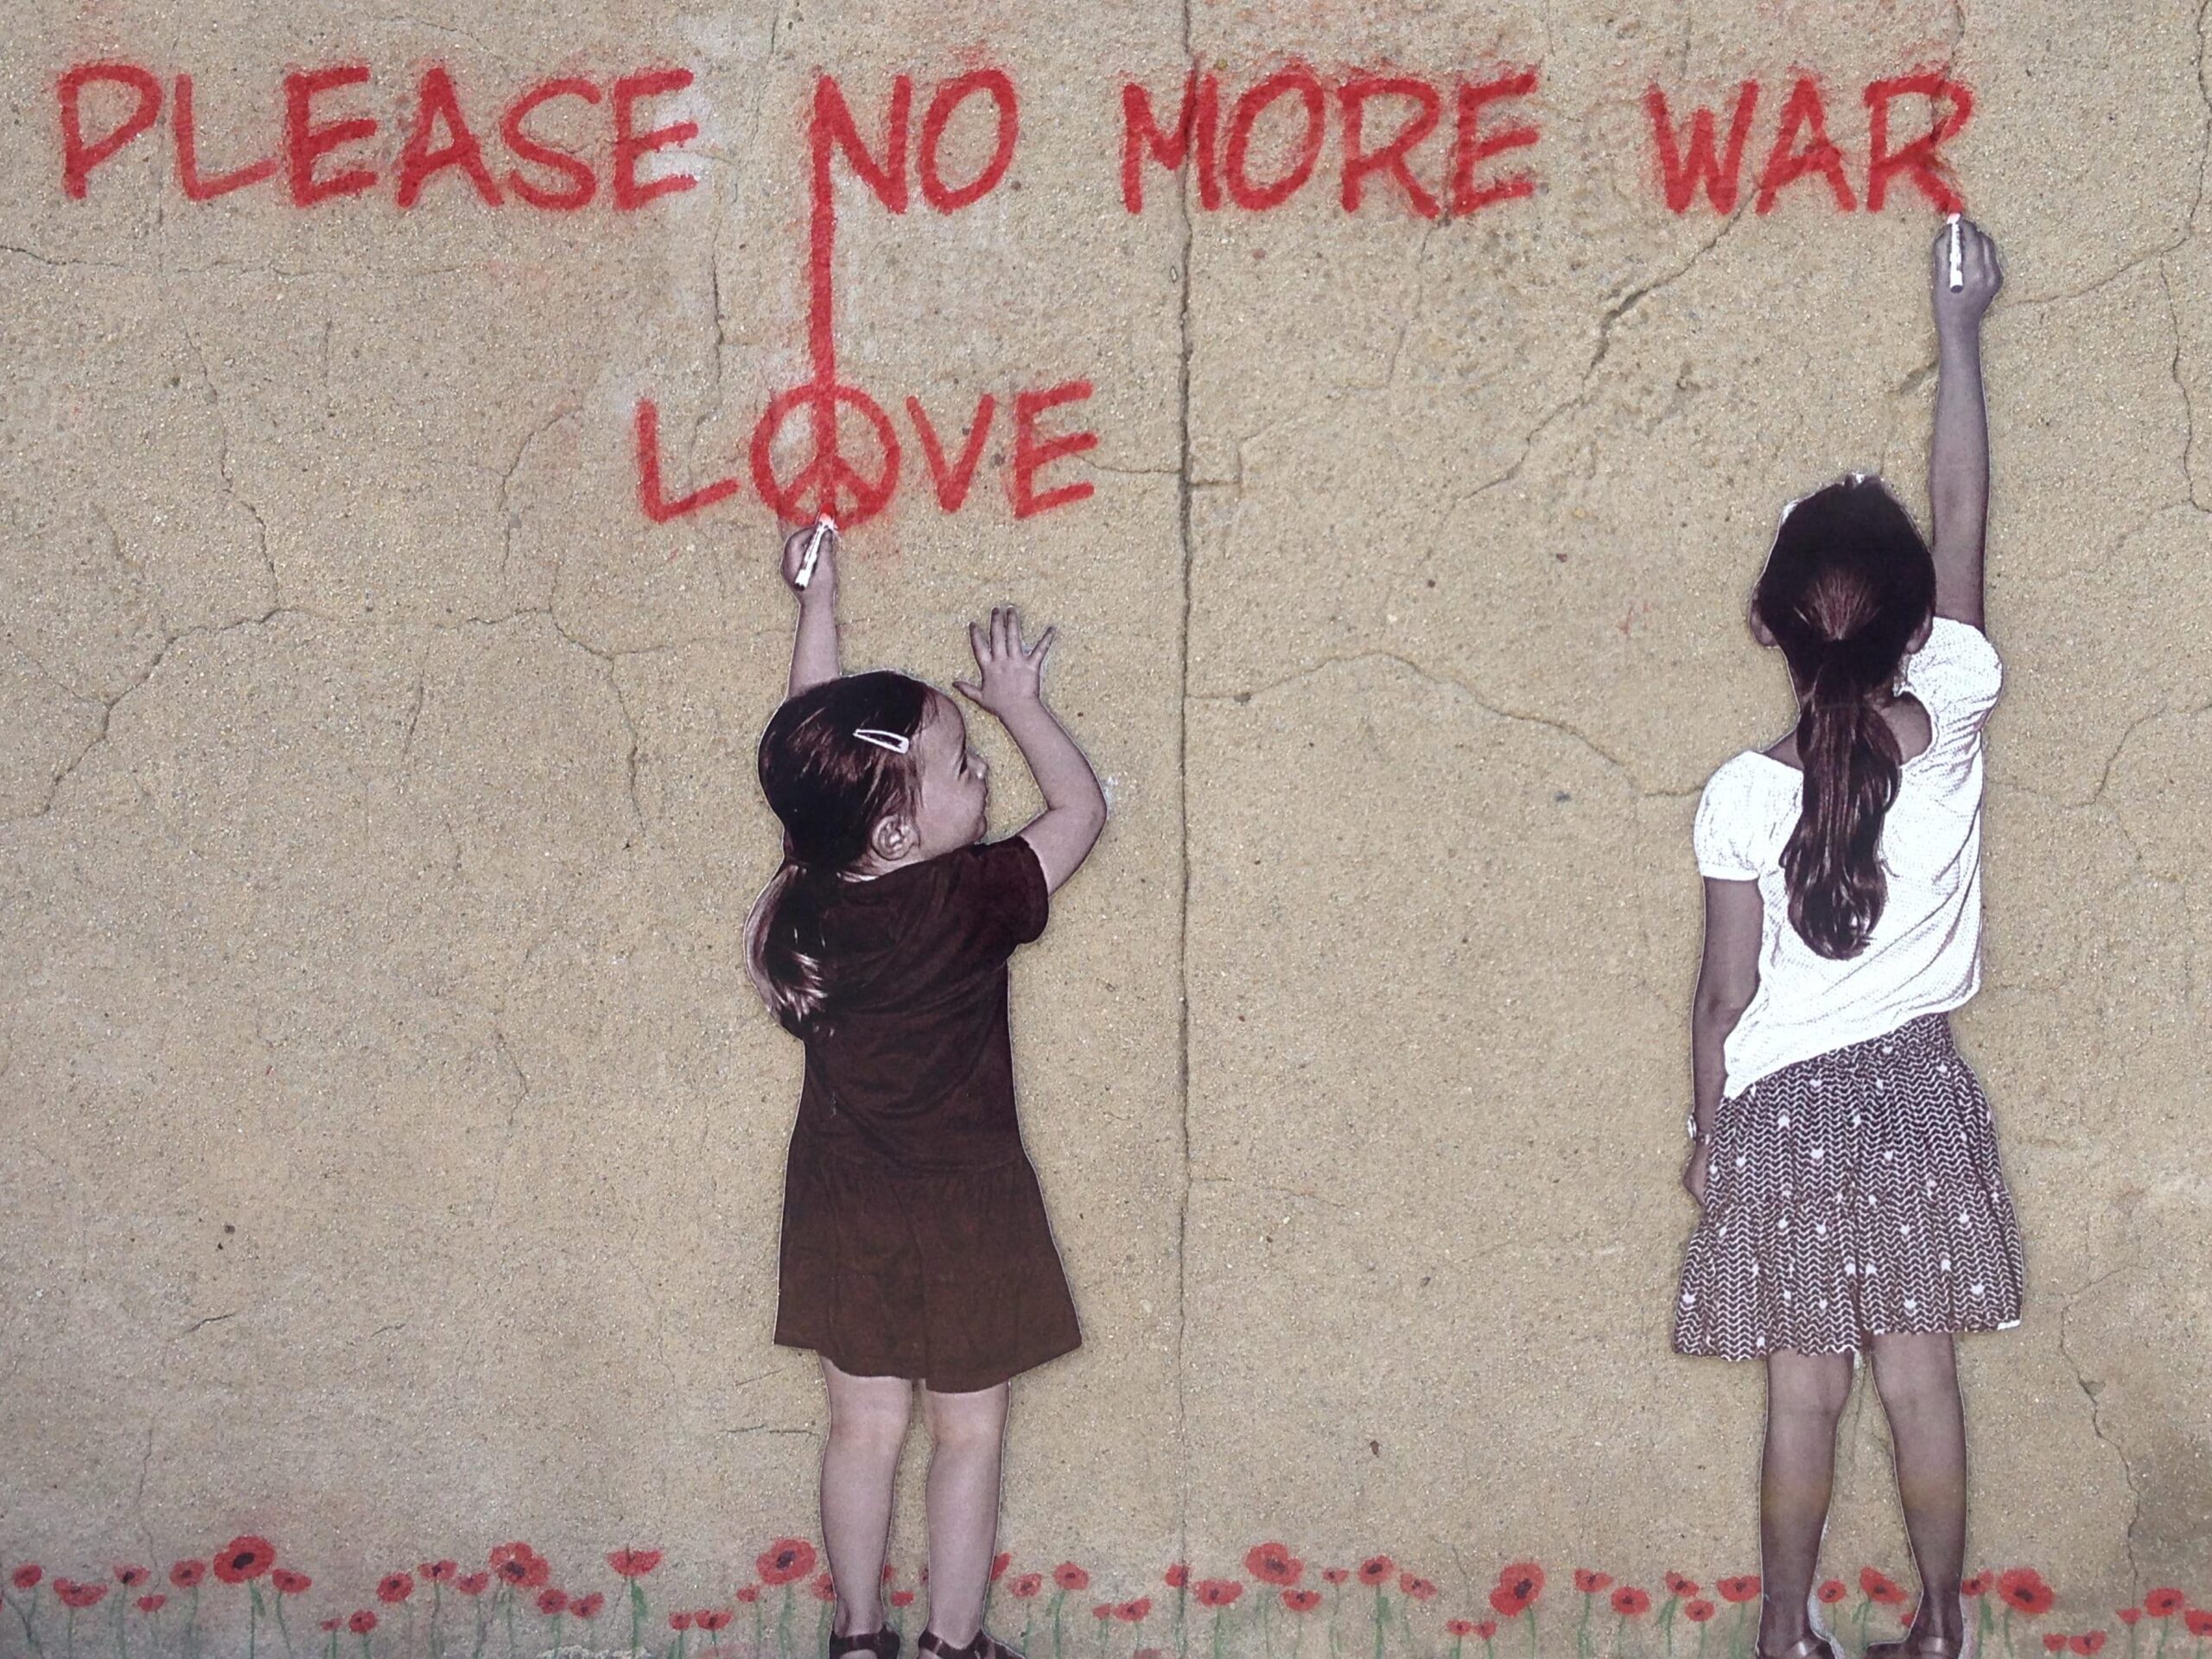 No war Love